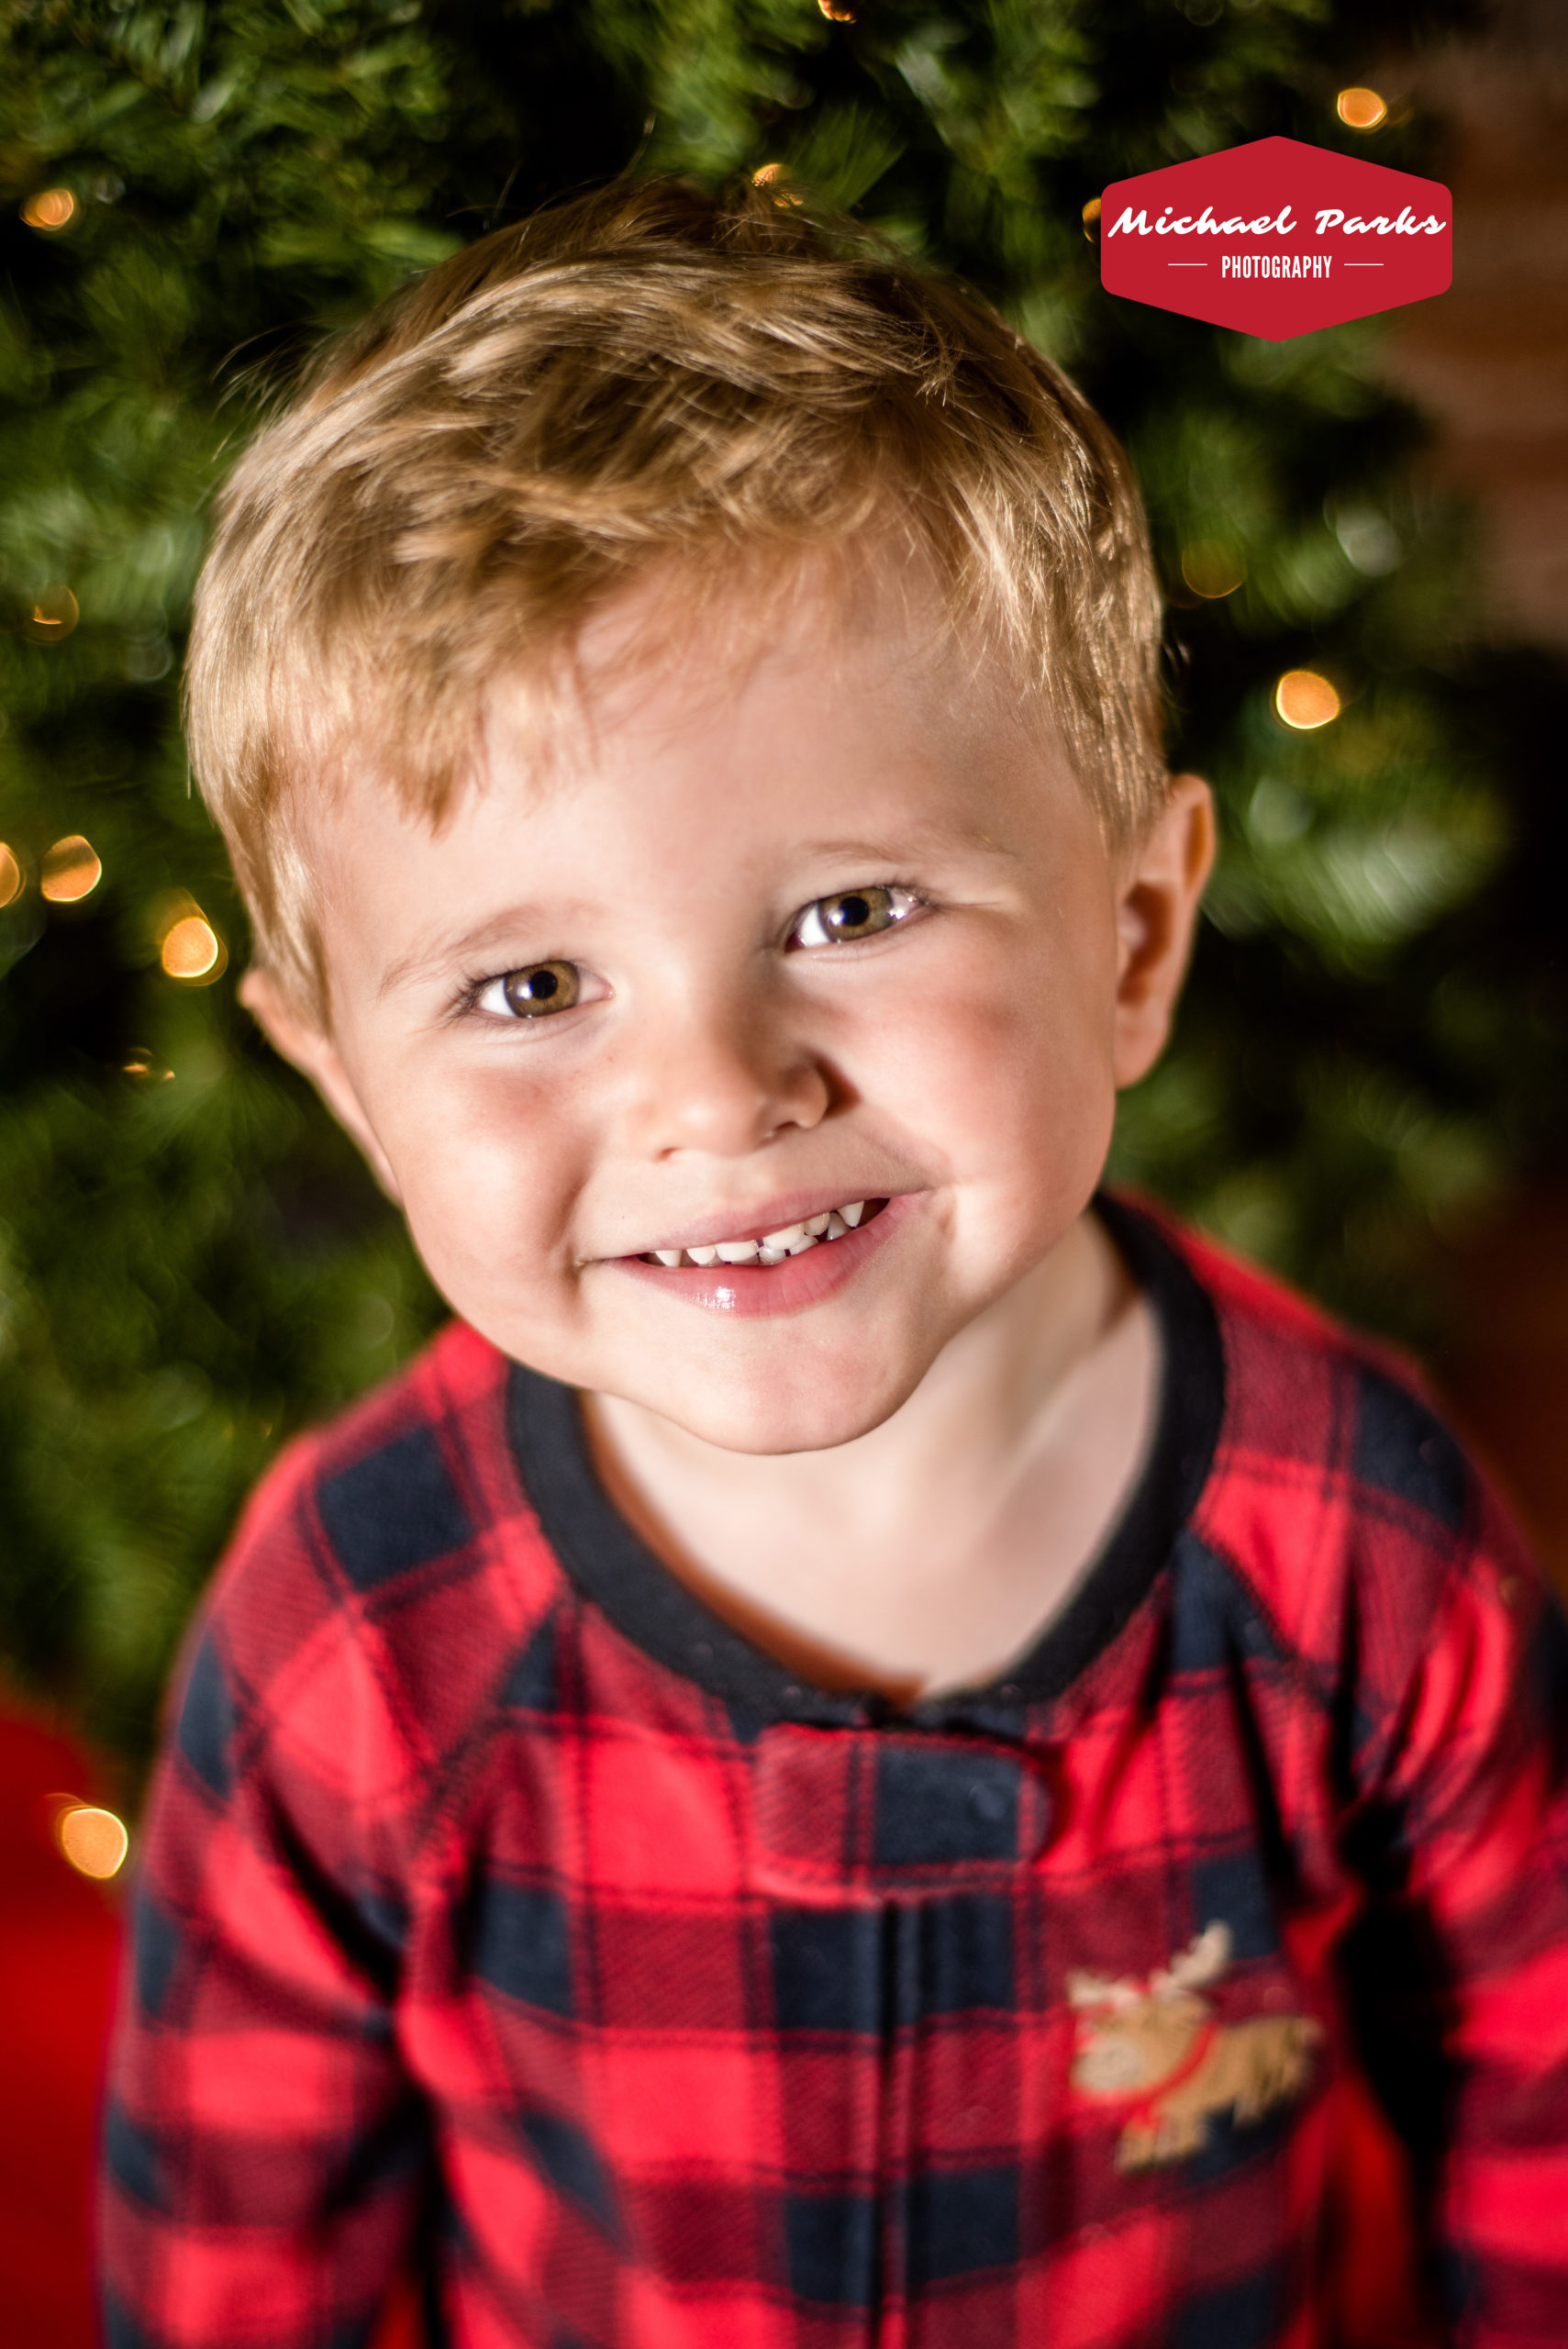 St Louis Christmas Mini Sessions - Christmas photo of child and Christmas tree